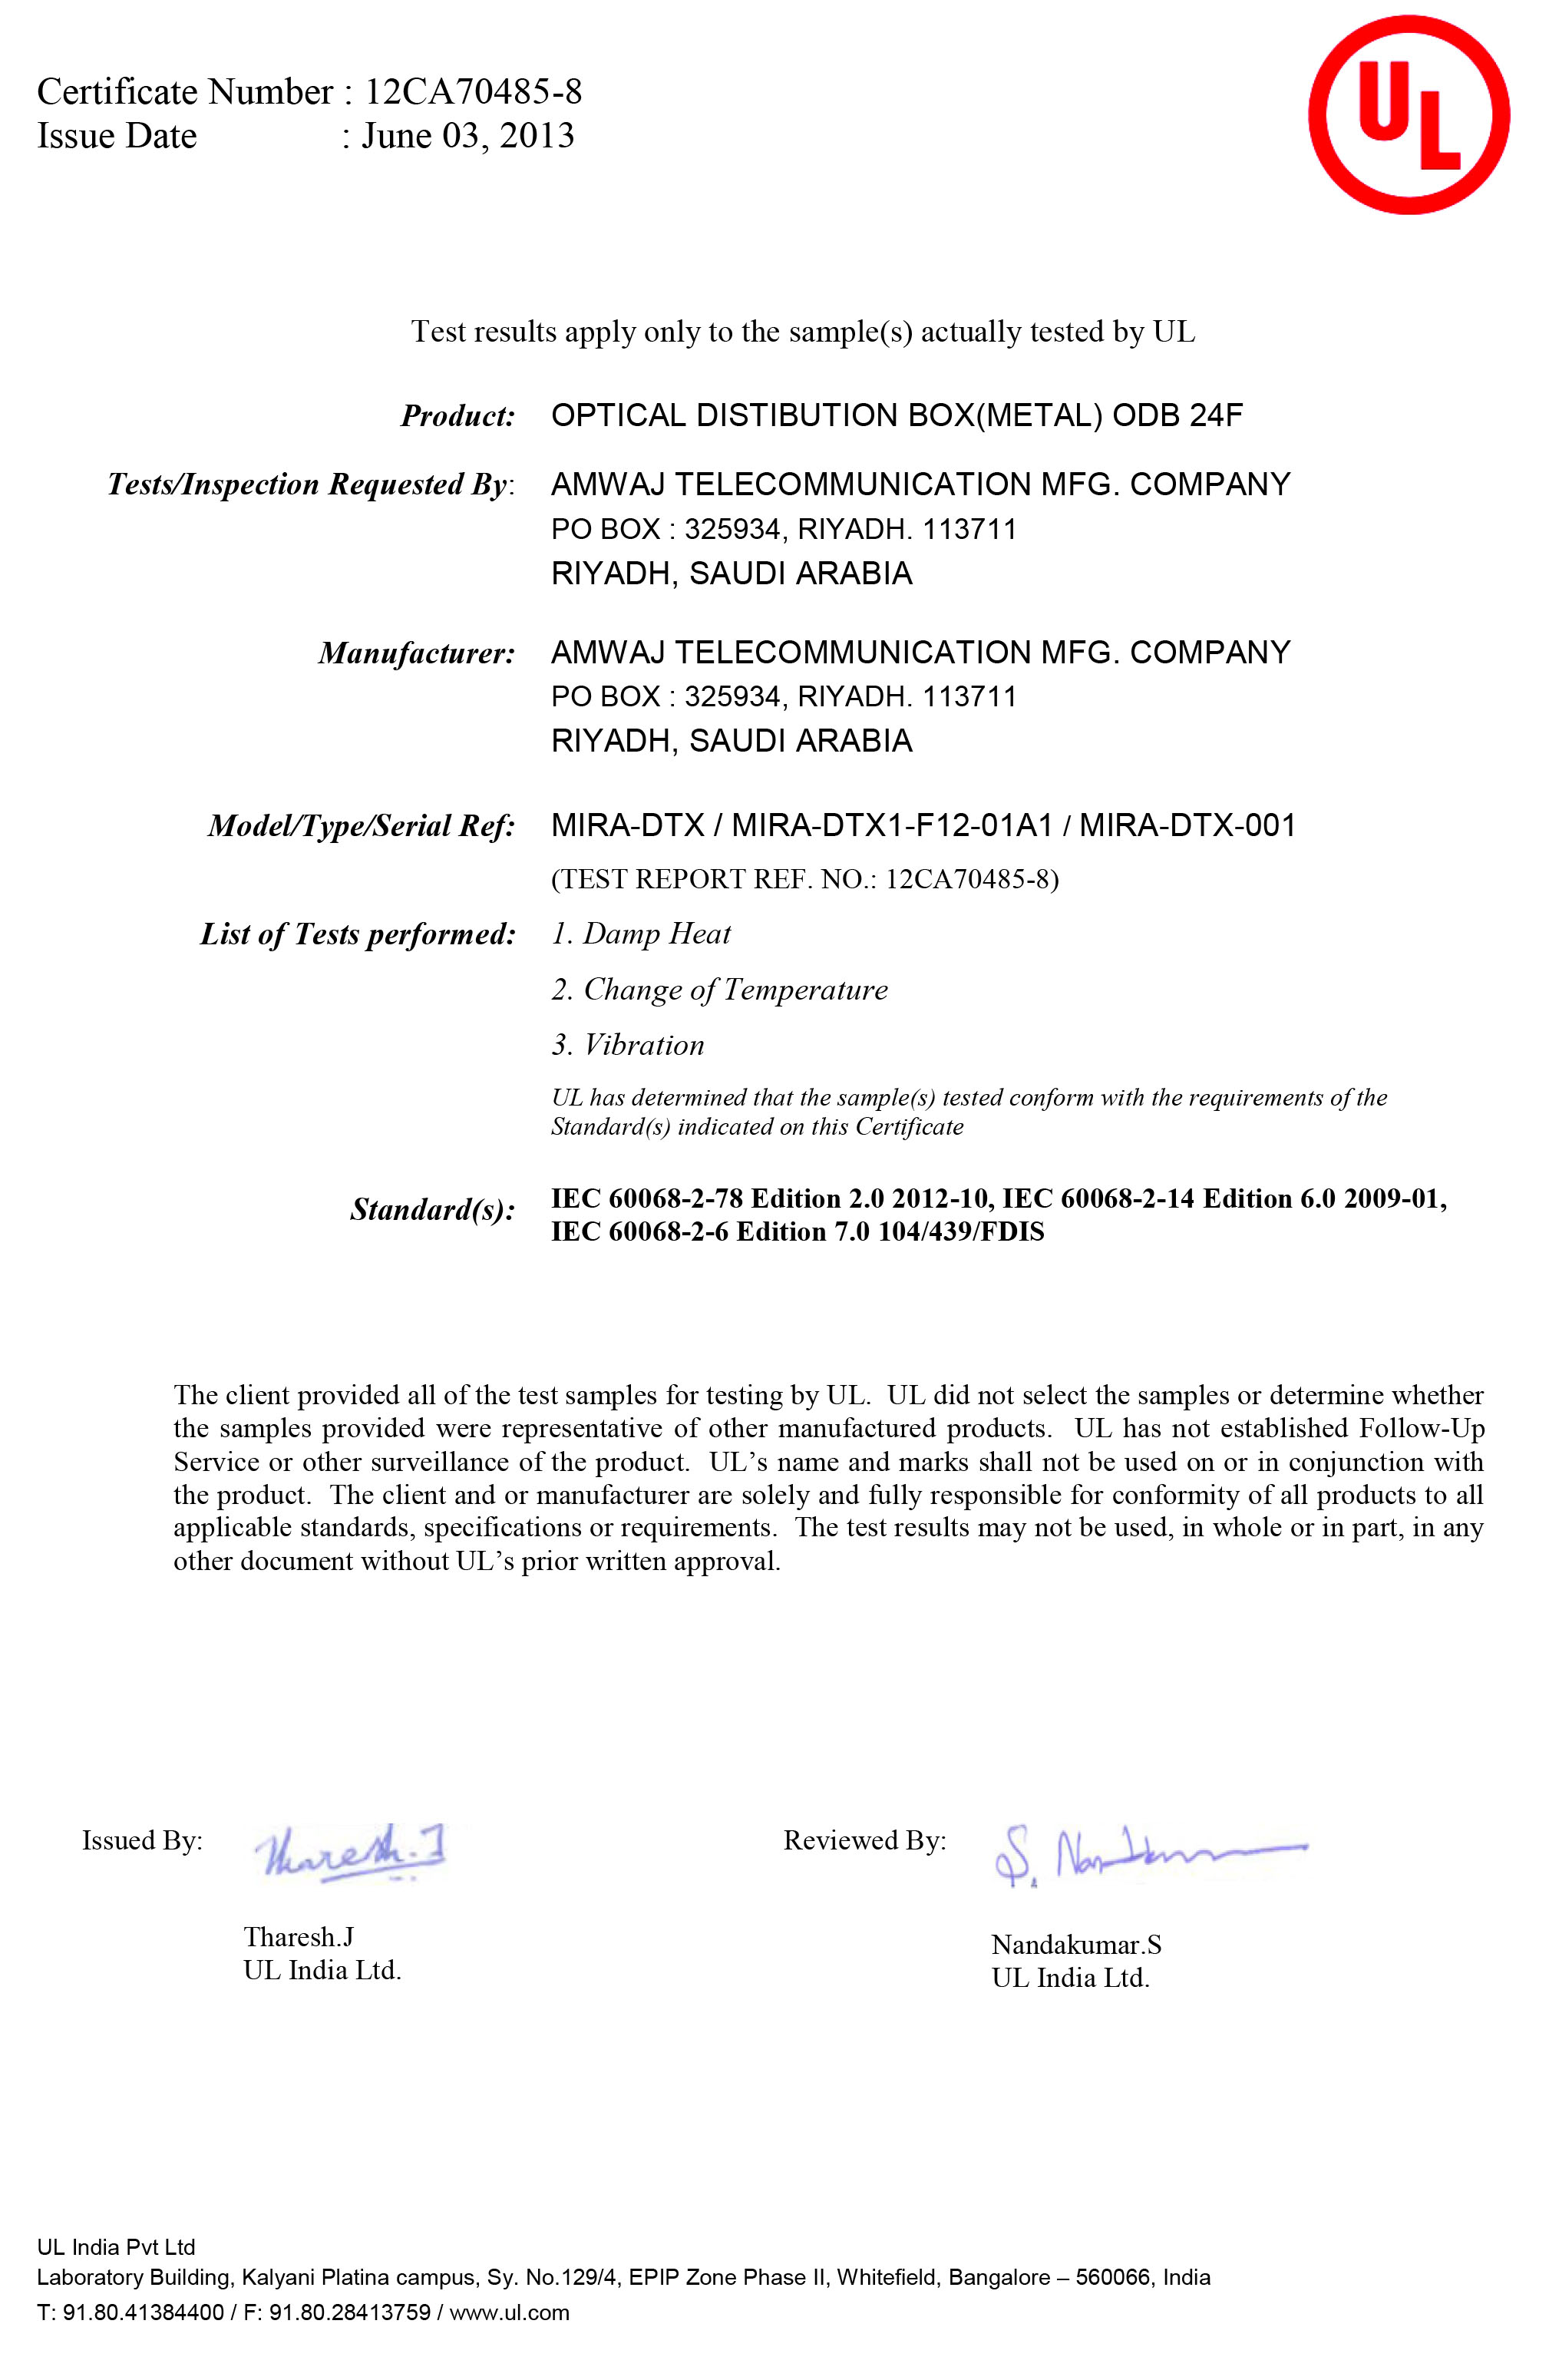 UL-Certificate-for-ODB-24FMetal